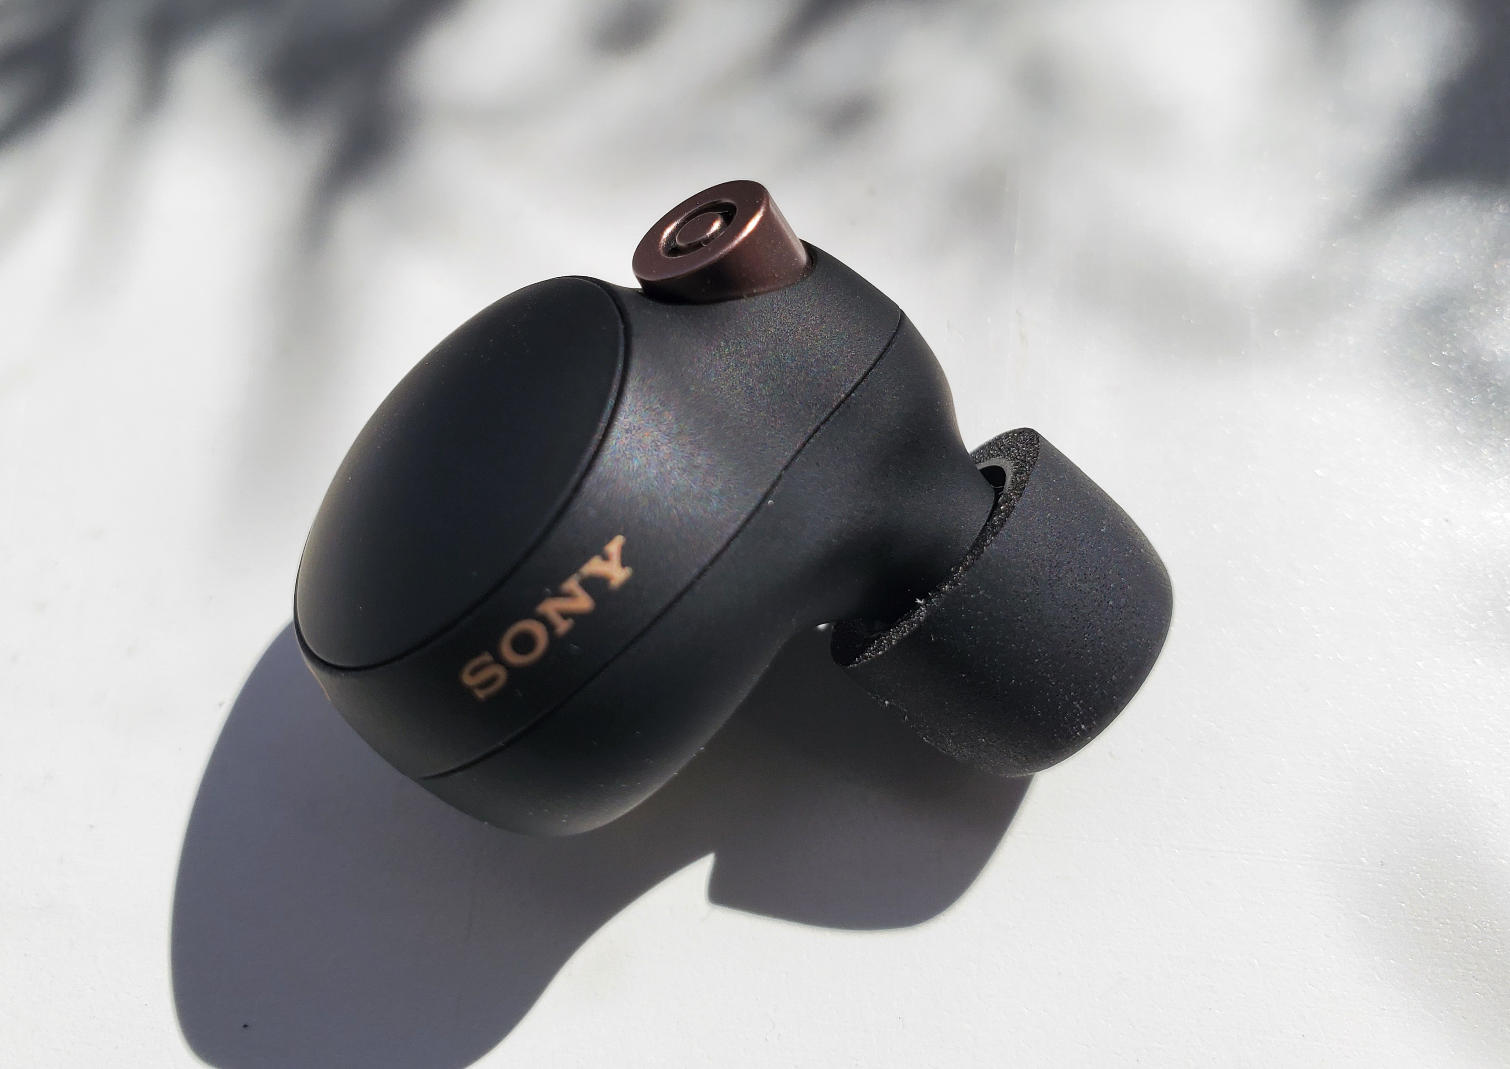 Sony Noise-Cancelling True Wireless Bluetooth Earbuds WF-1000XM4 - Black